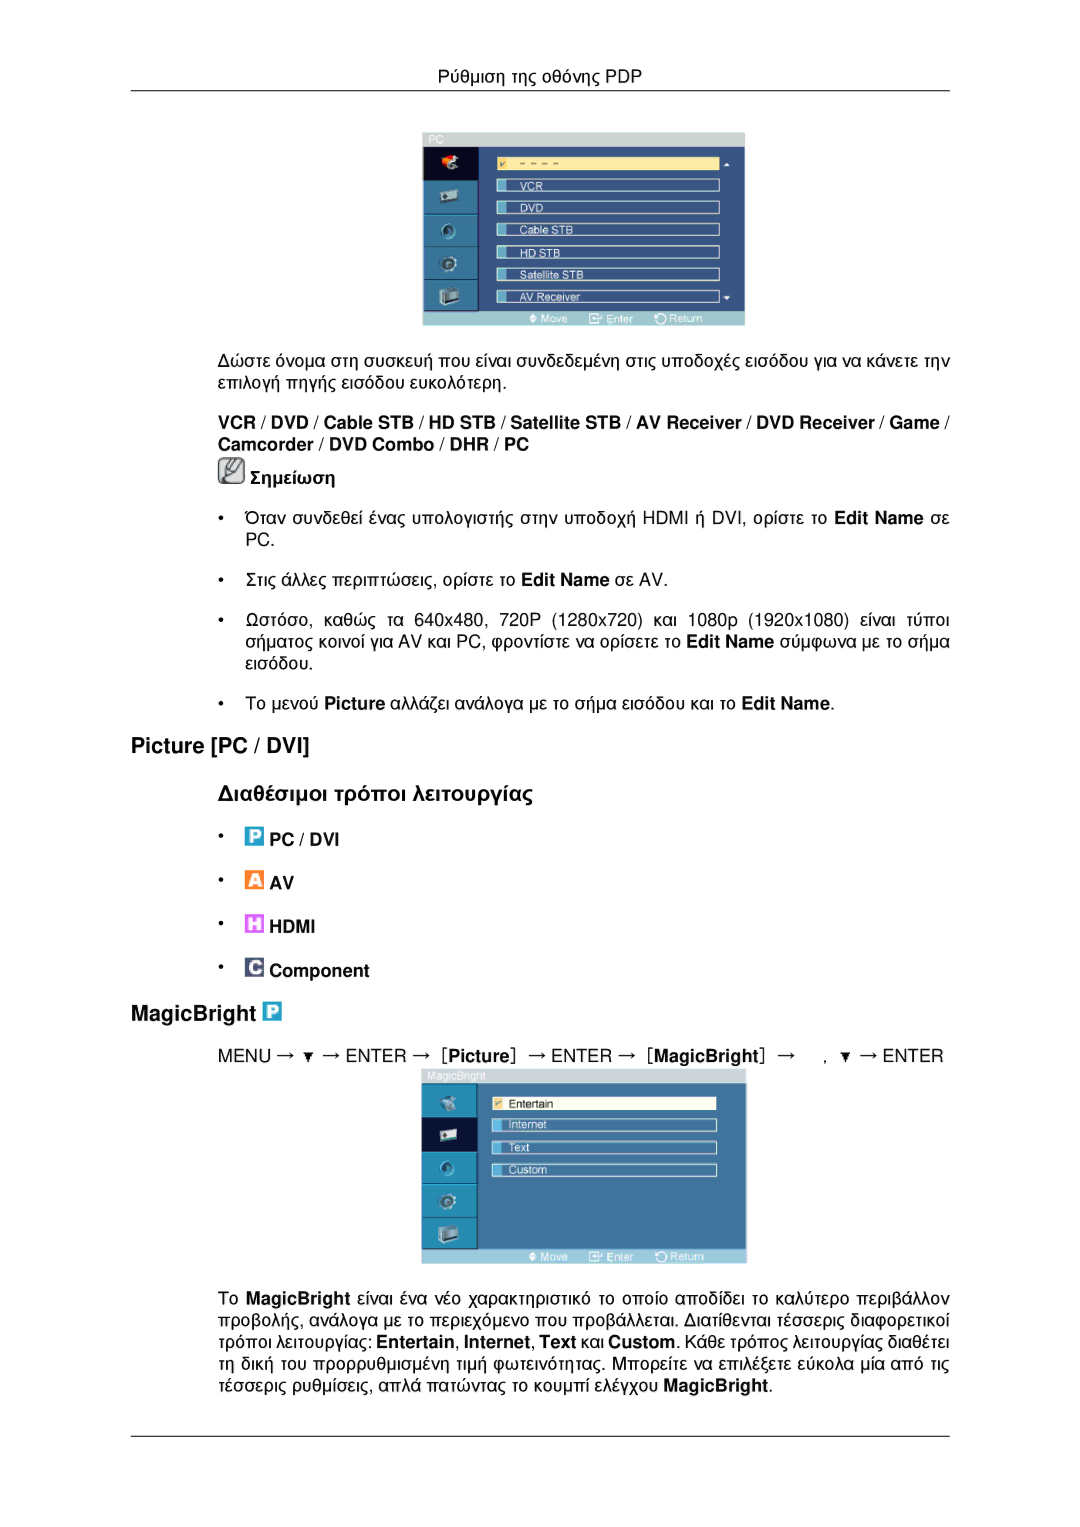 Samsung PH42KPPLBC/EN manual Picture PC / DVI Διαθέσιμοι τρόποι λειτουργίας, MagicBright 